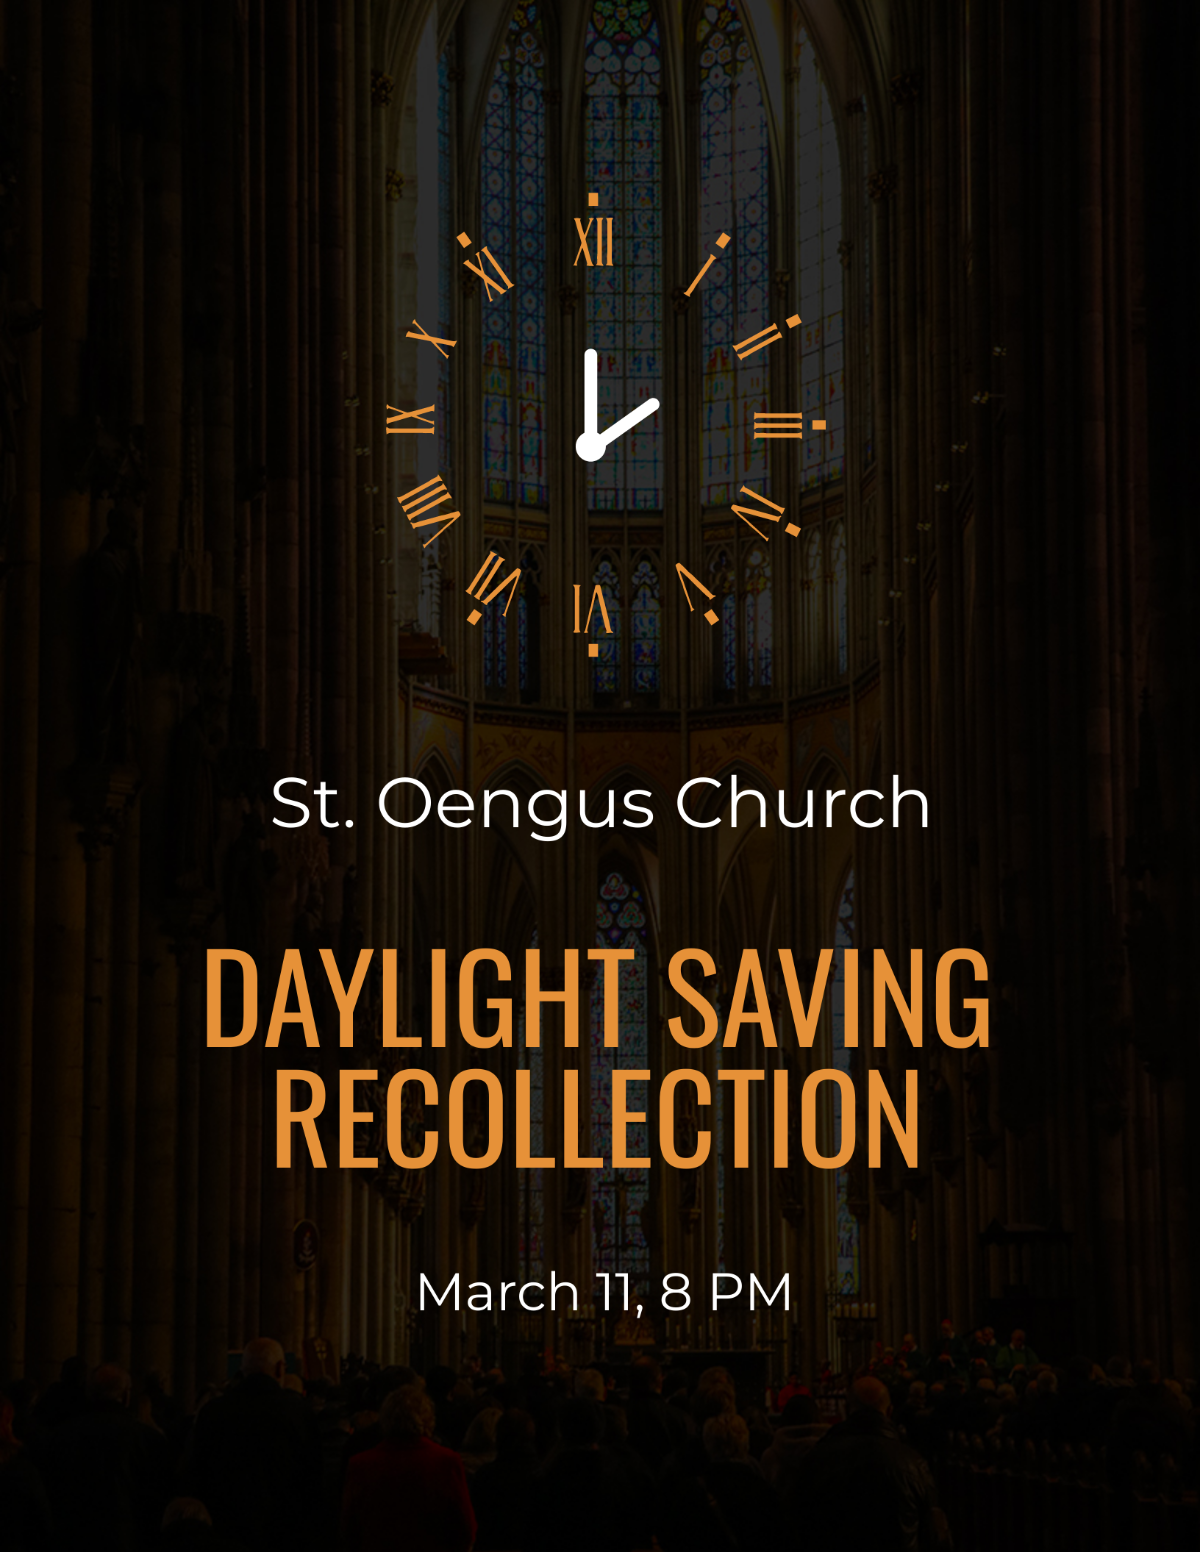 Daylight Saving Church Flyer Template